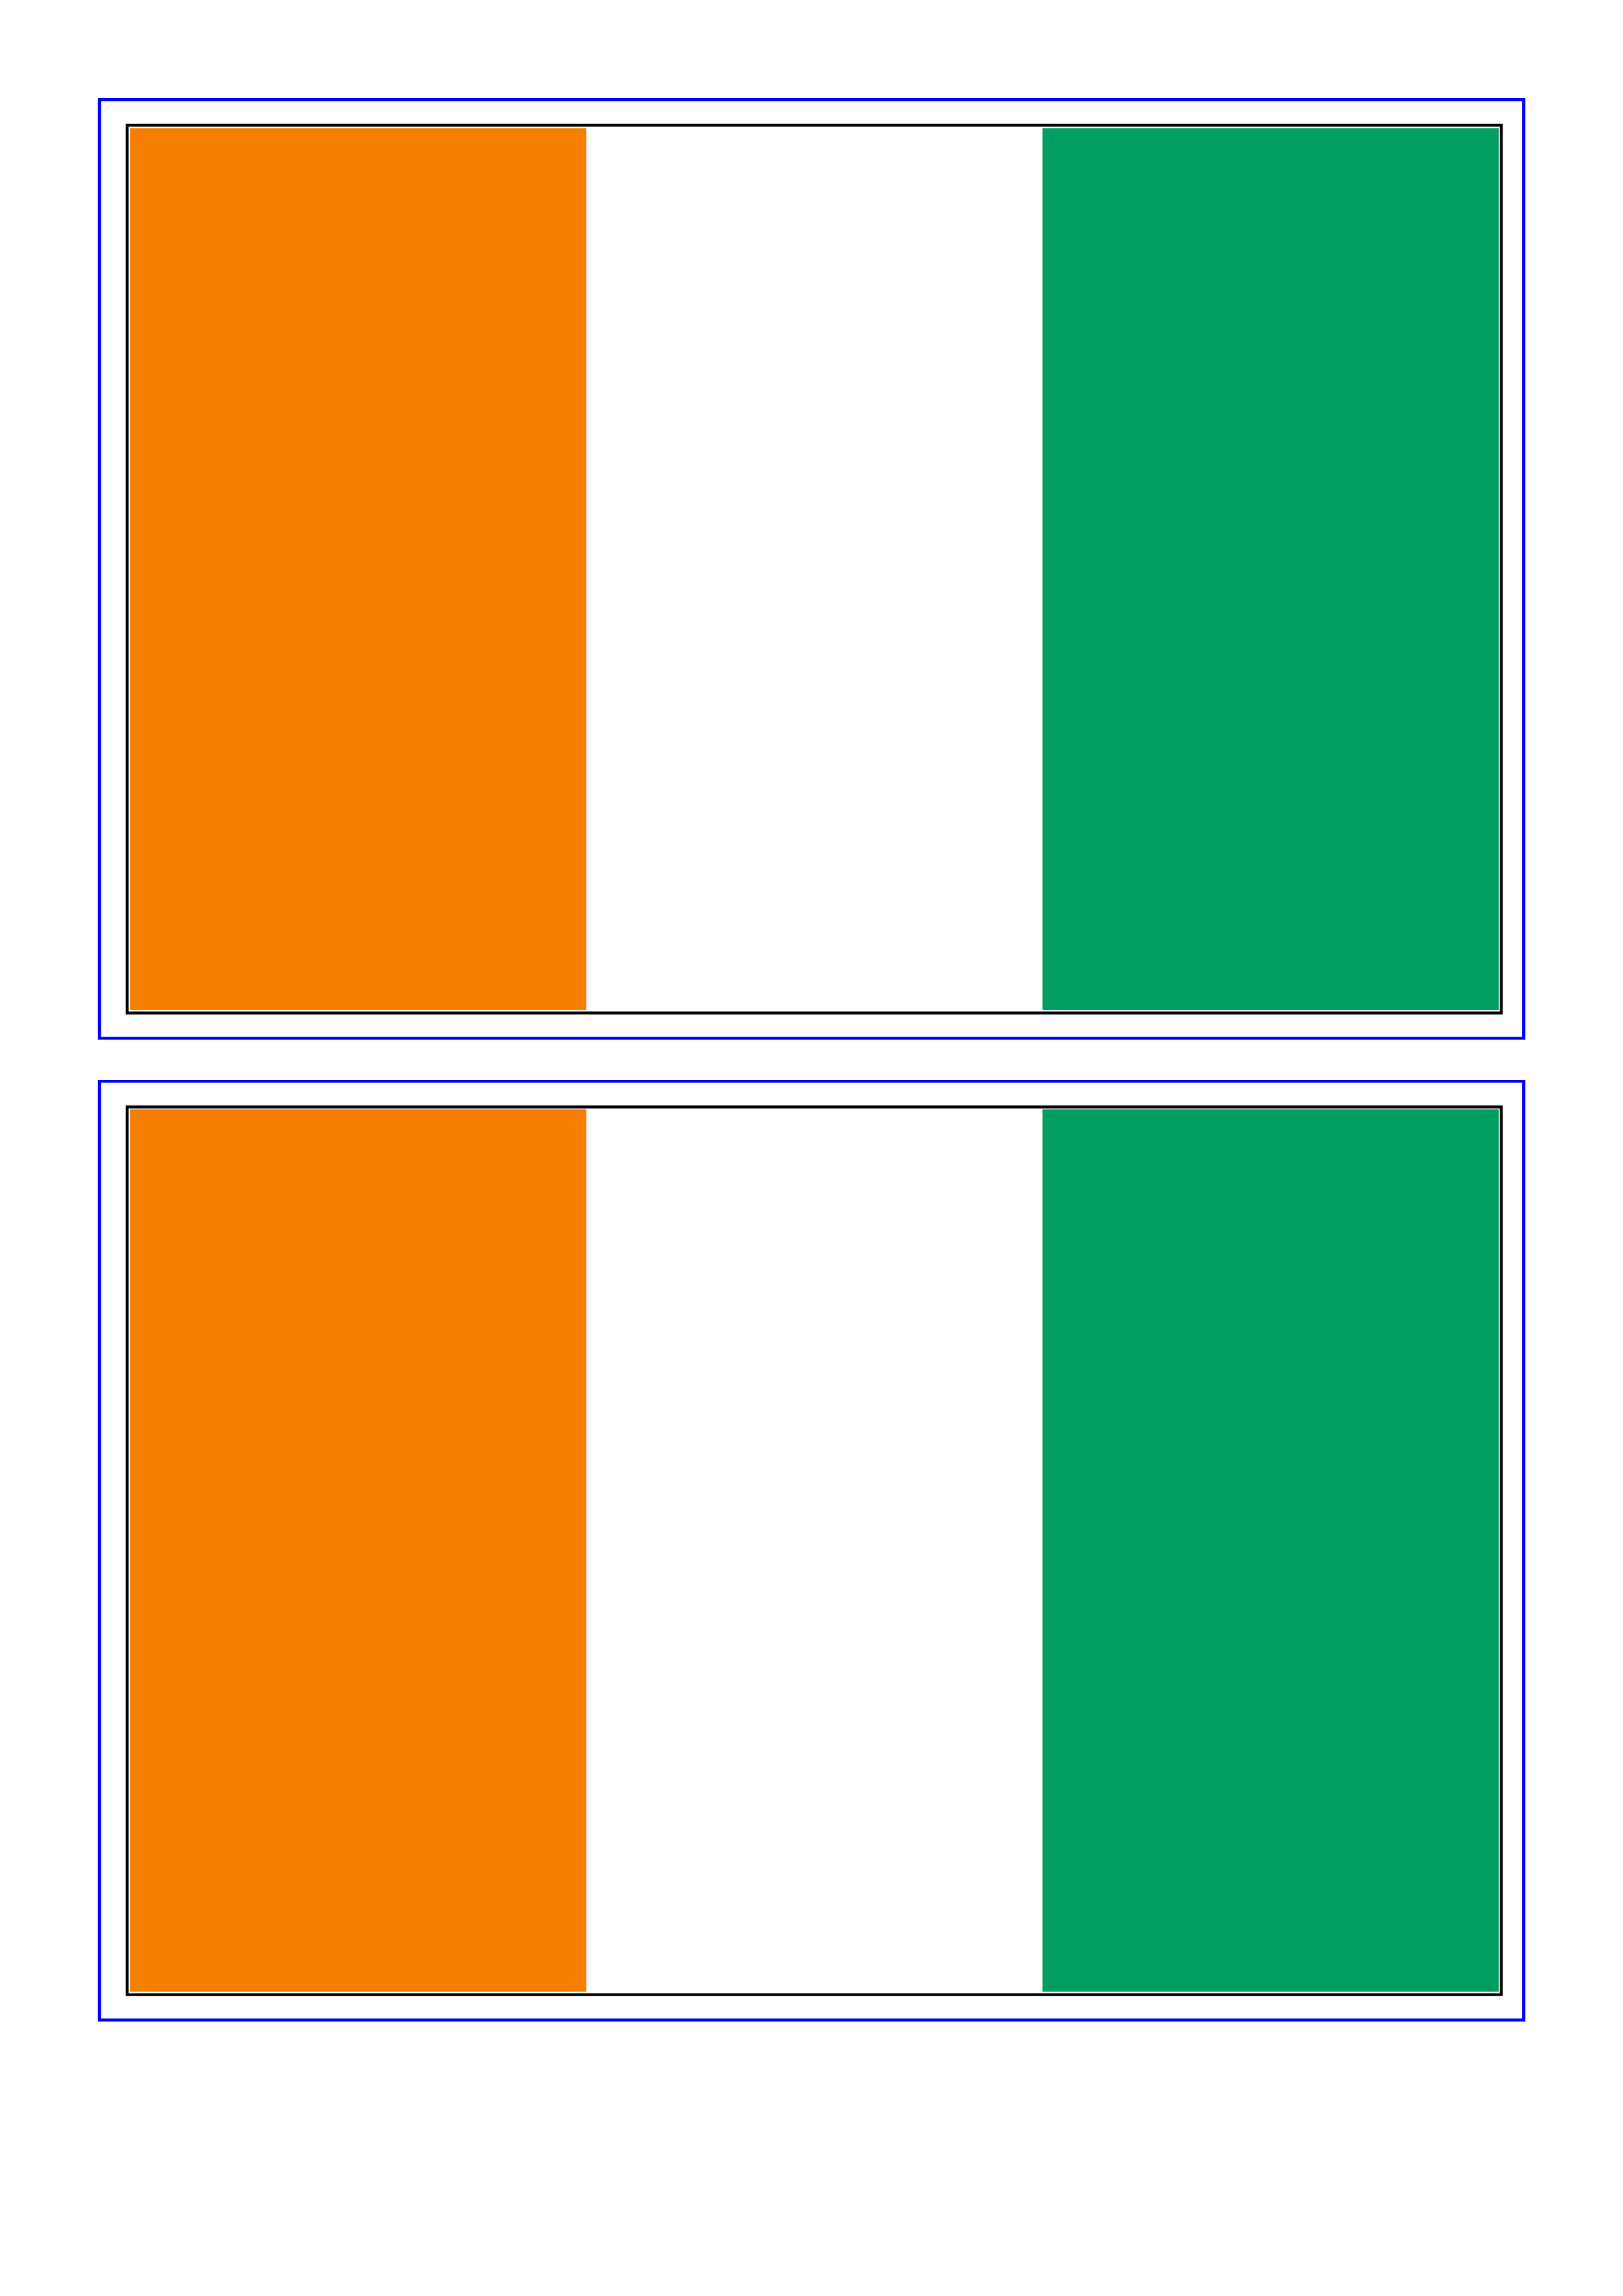 Ivory Coast Flag template main image